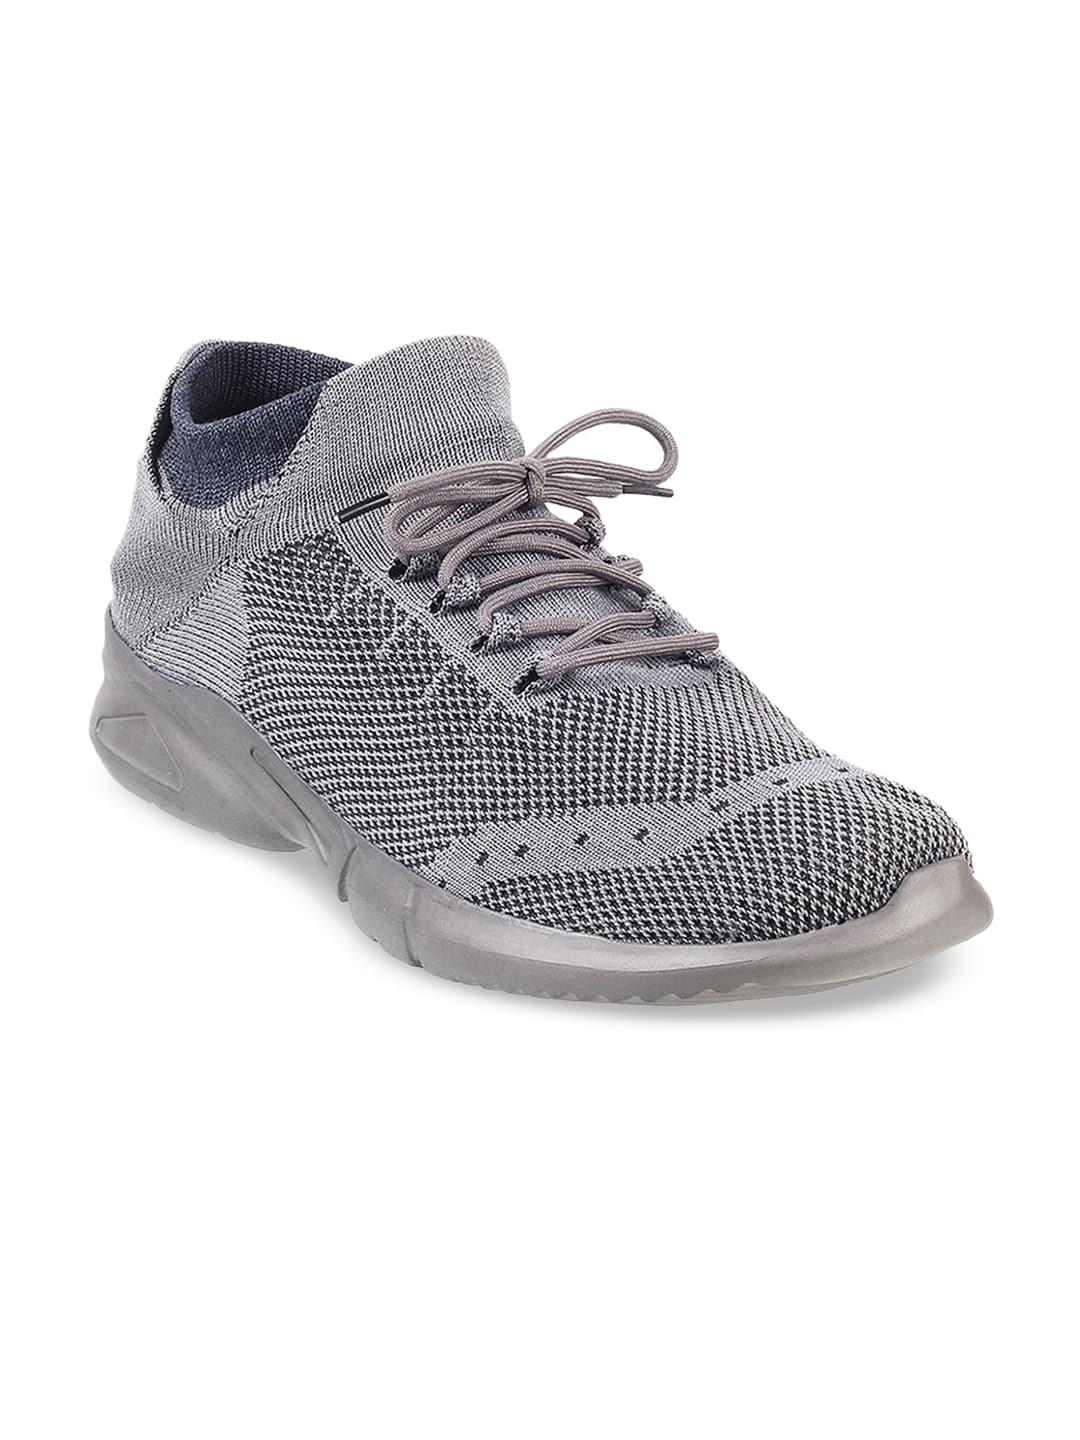 mochi-men-woven-design-comfort-insole-basics-sneakers